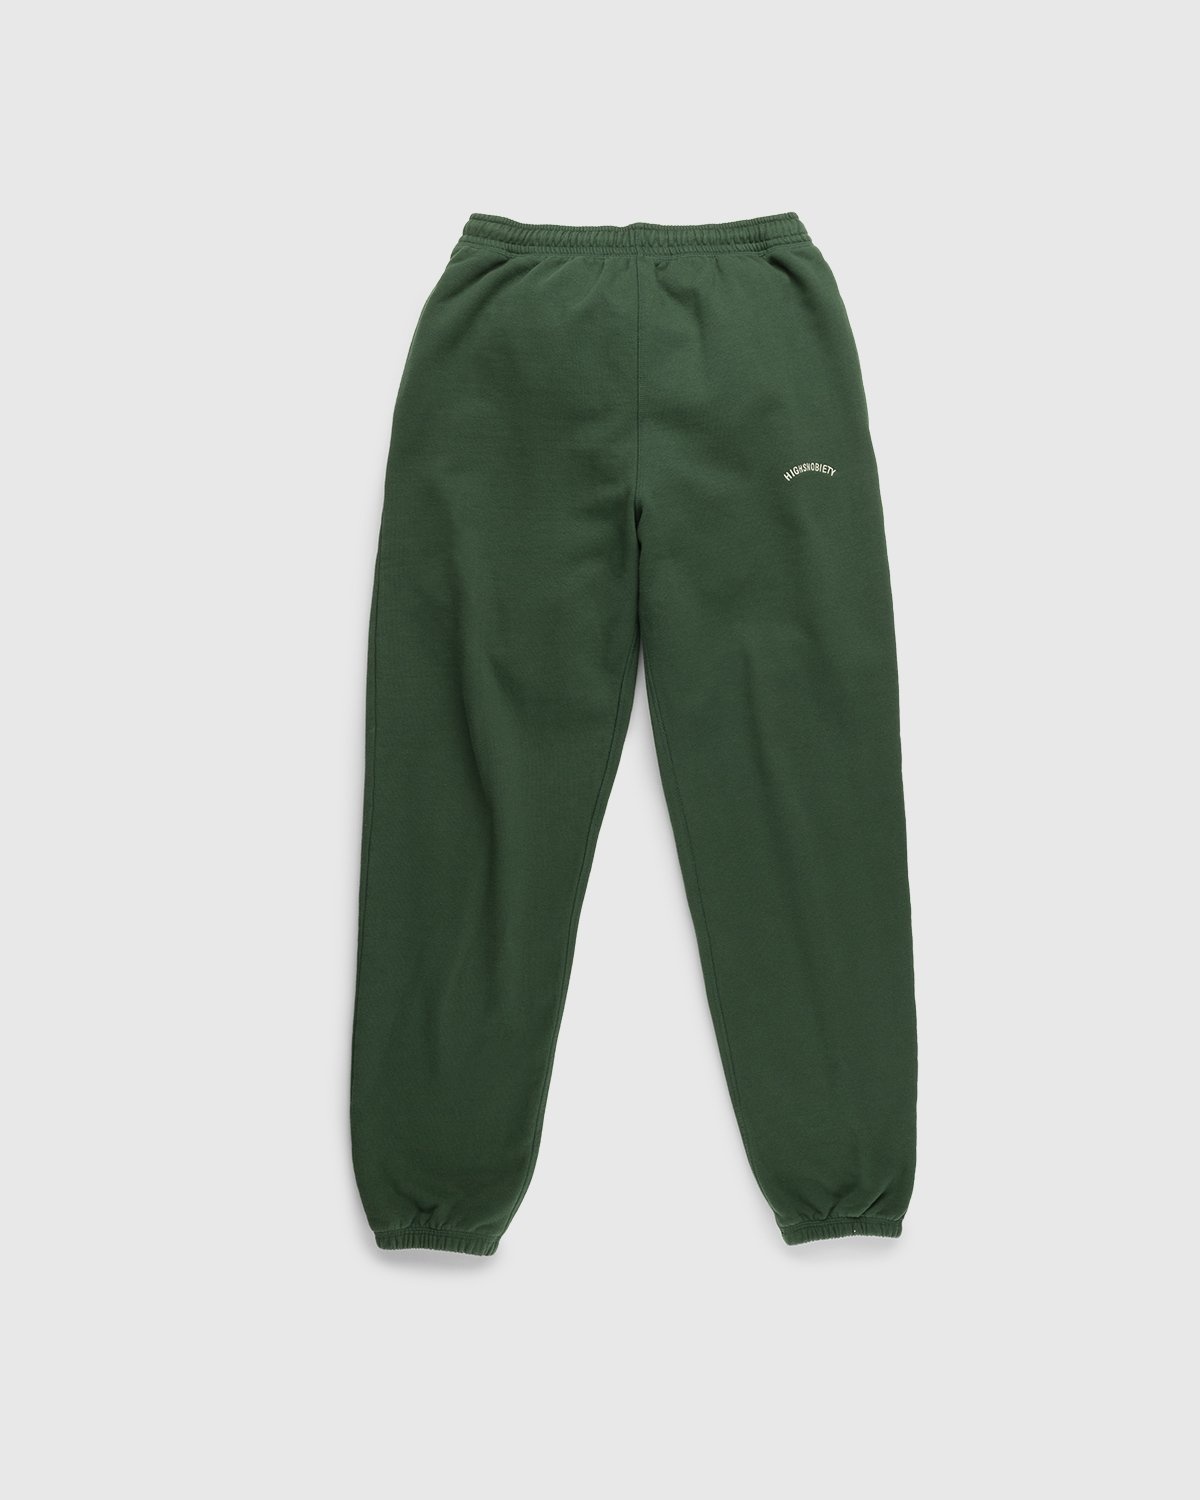 Highsnobiety – Logo Fleece Staples Pants Campus Green - Pants - Green - Image 1